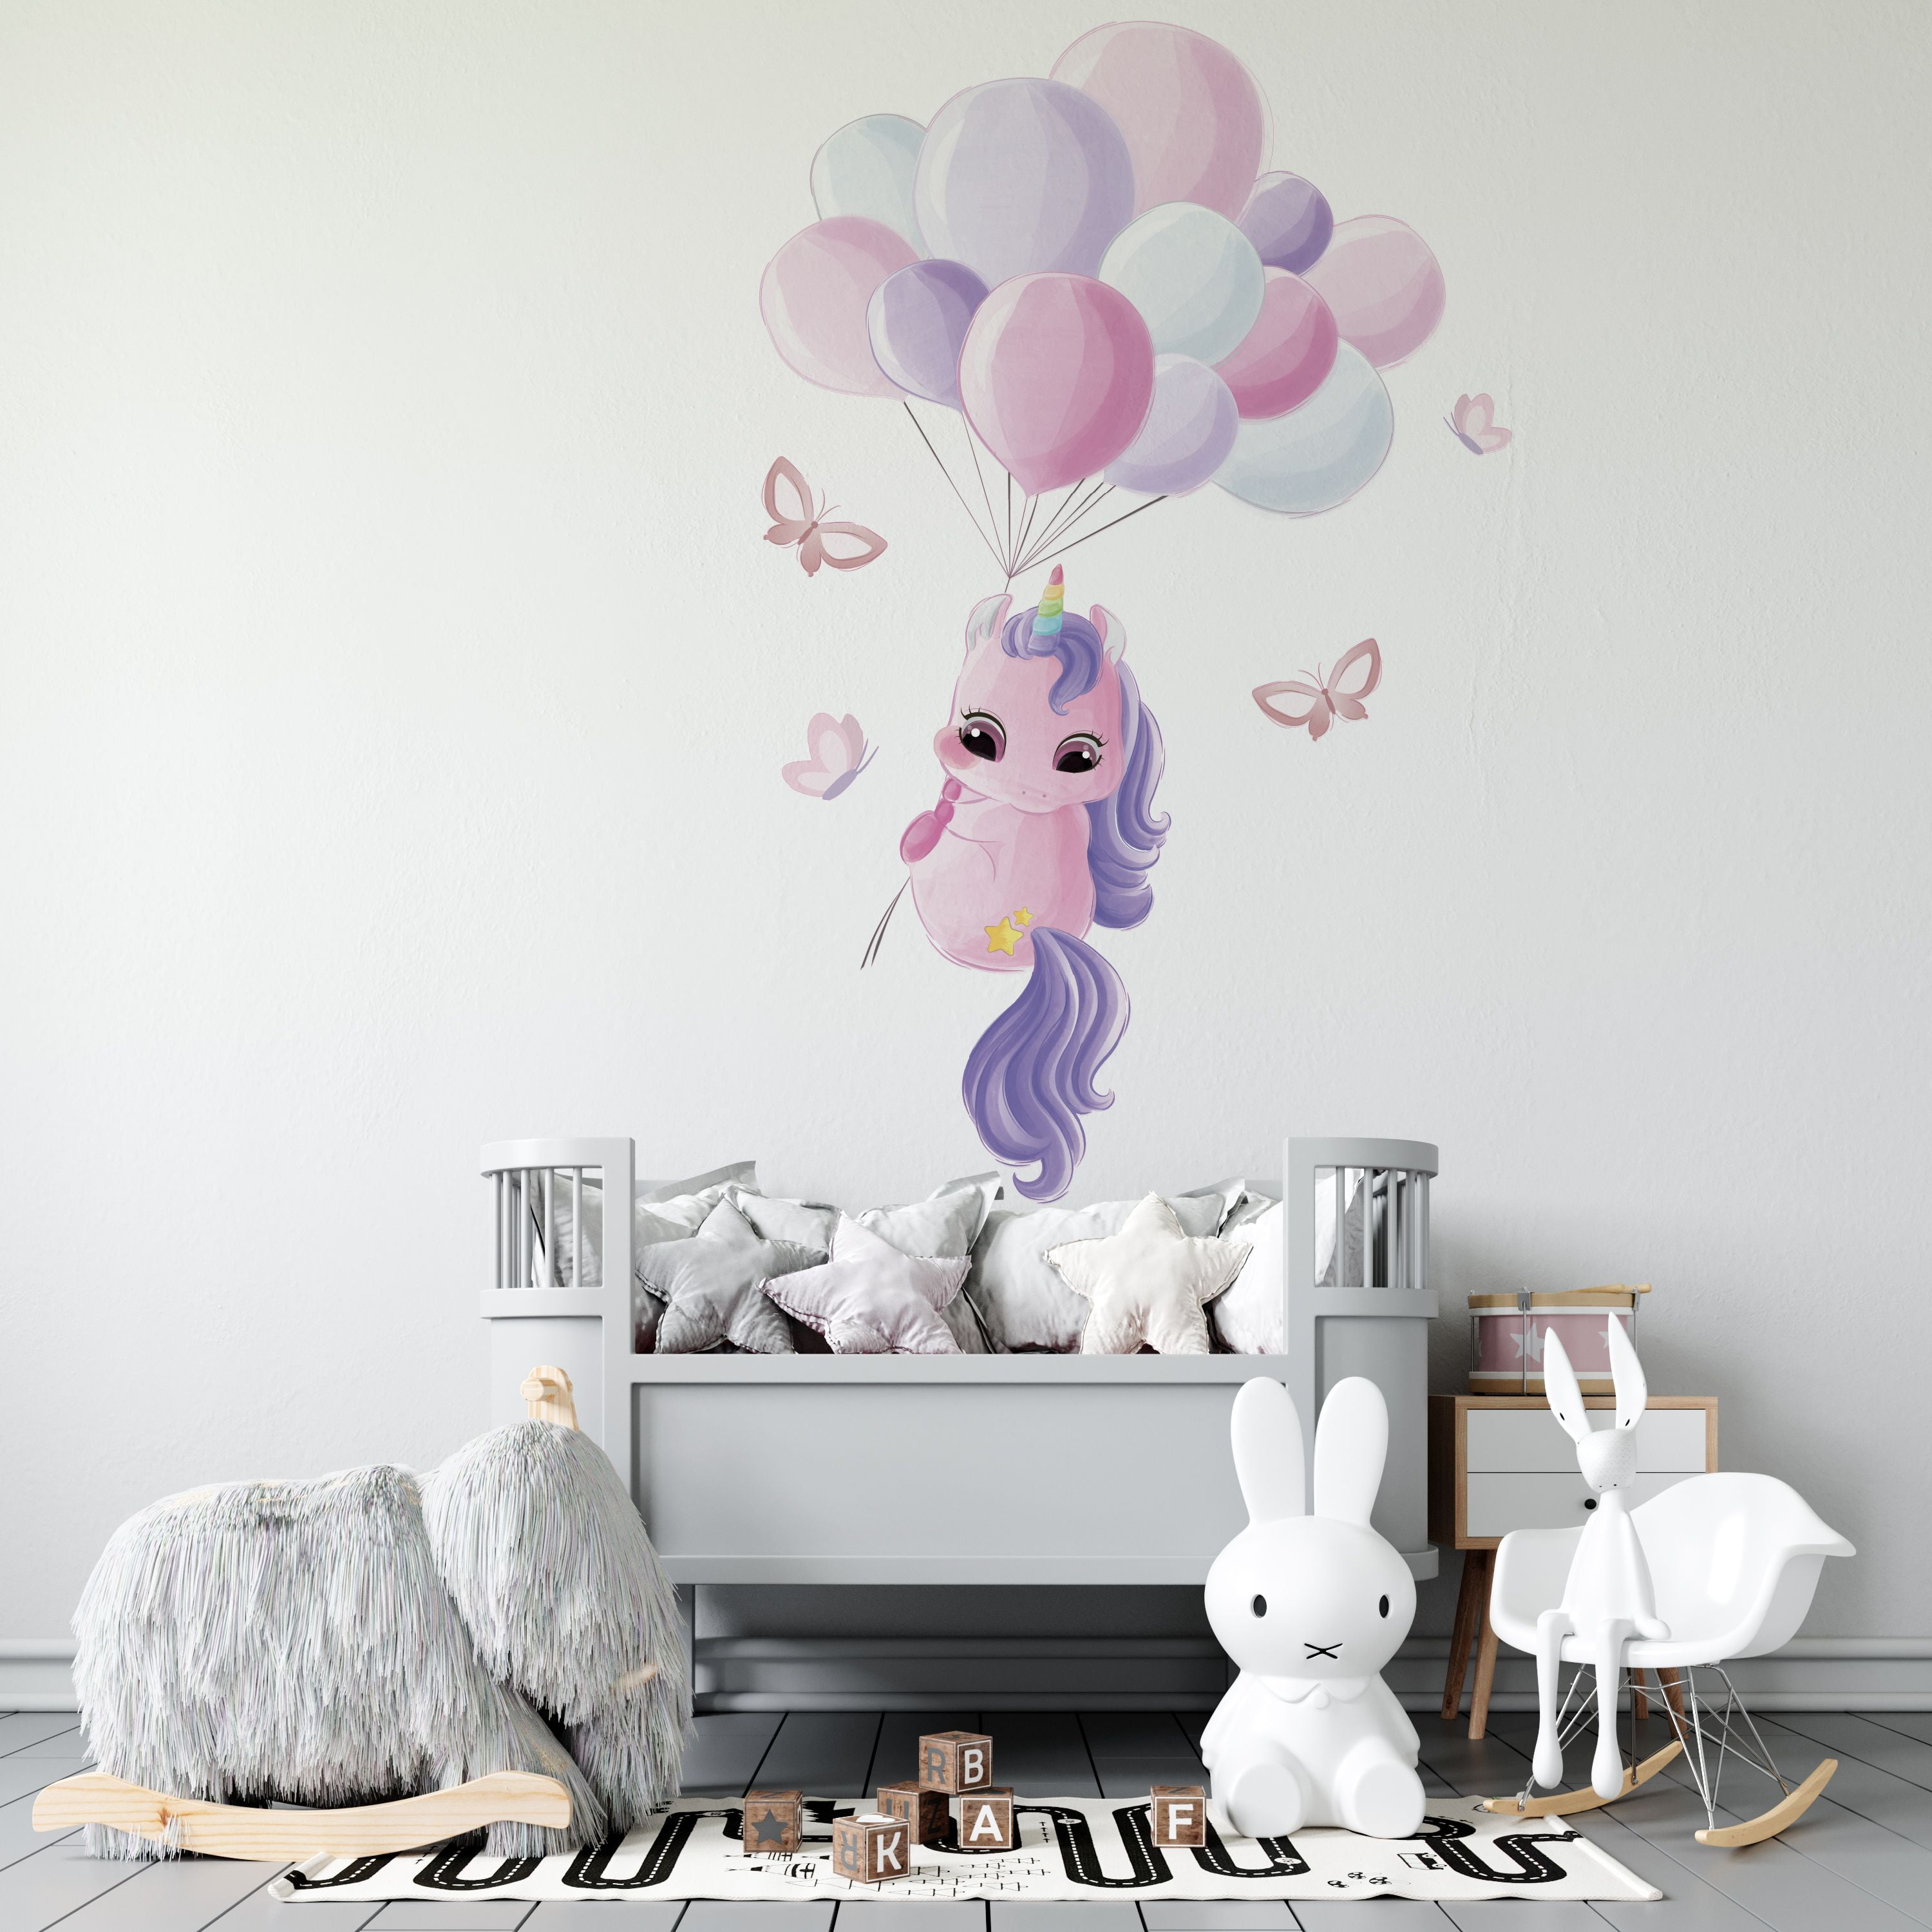 Cartoon Girl Balloons Wall Stickers Mural Decals Kids Room Baby Bedroom Decor 